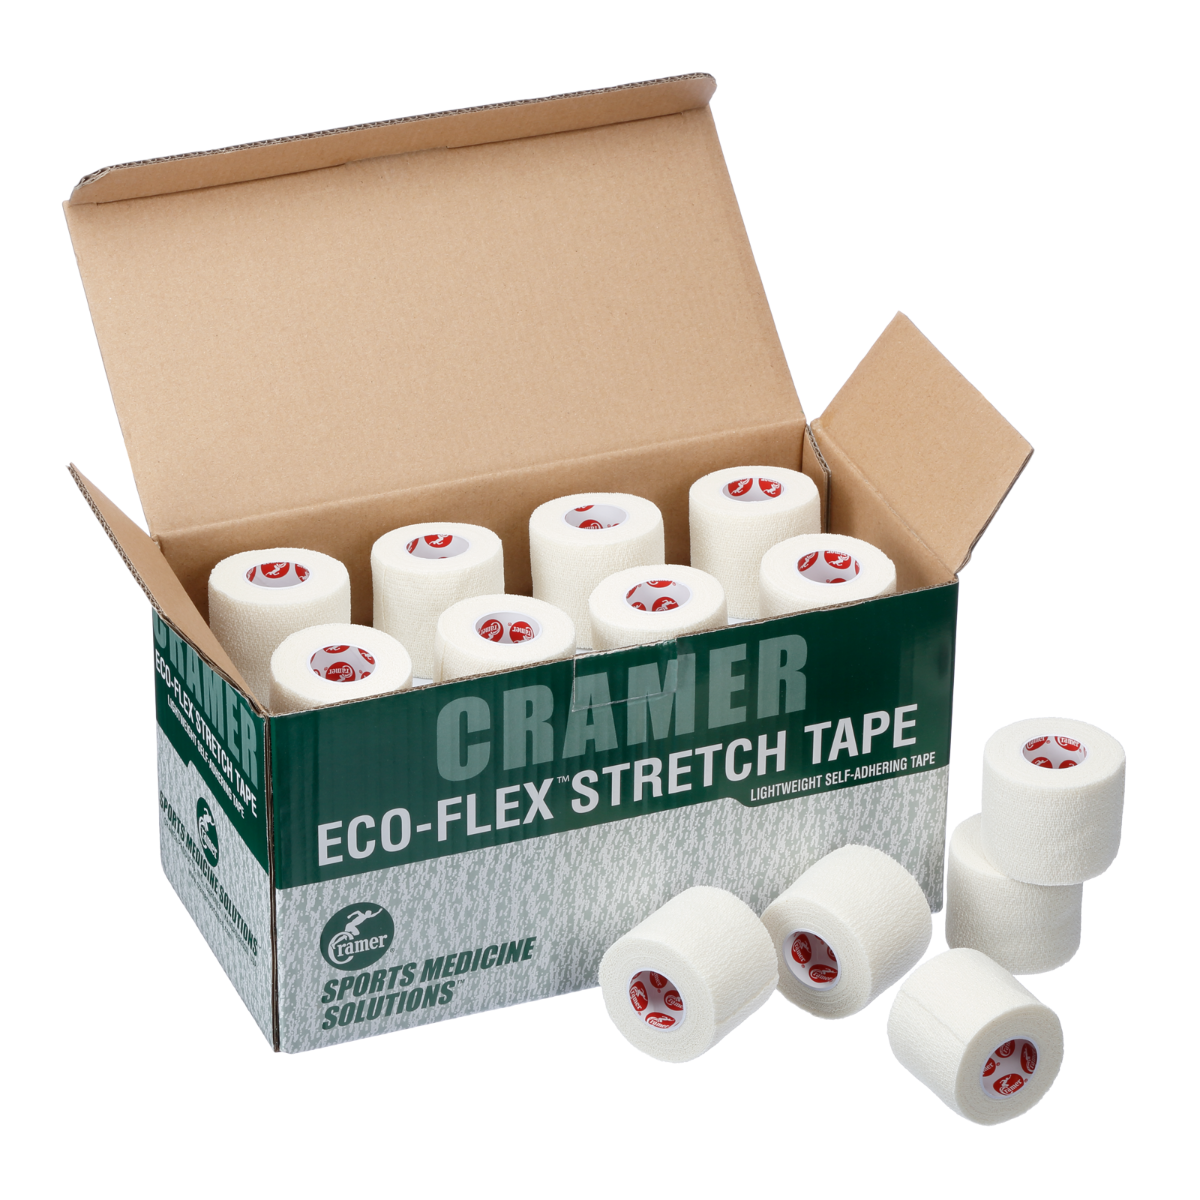 Eco-Flex Stretch Tape by Cramer